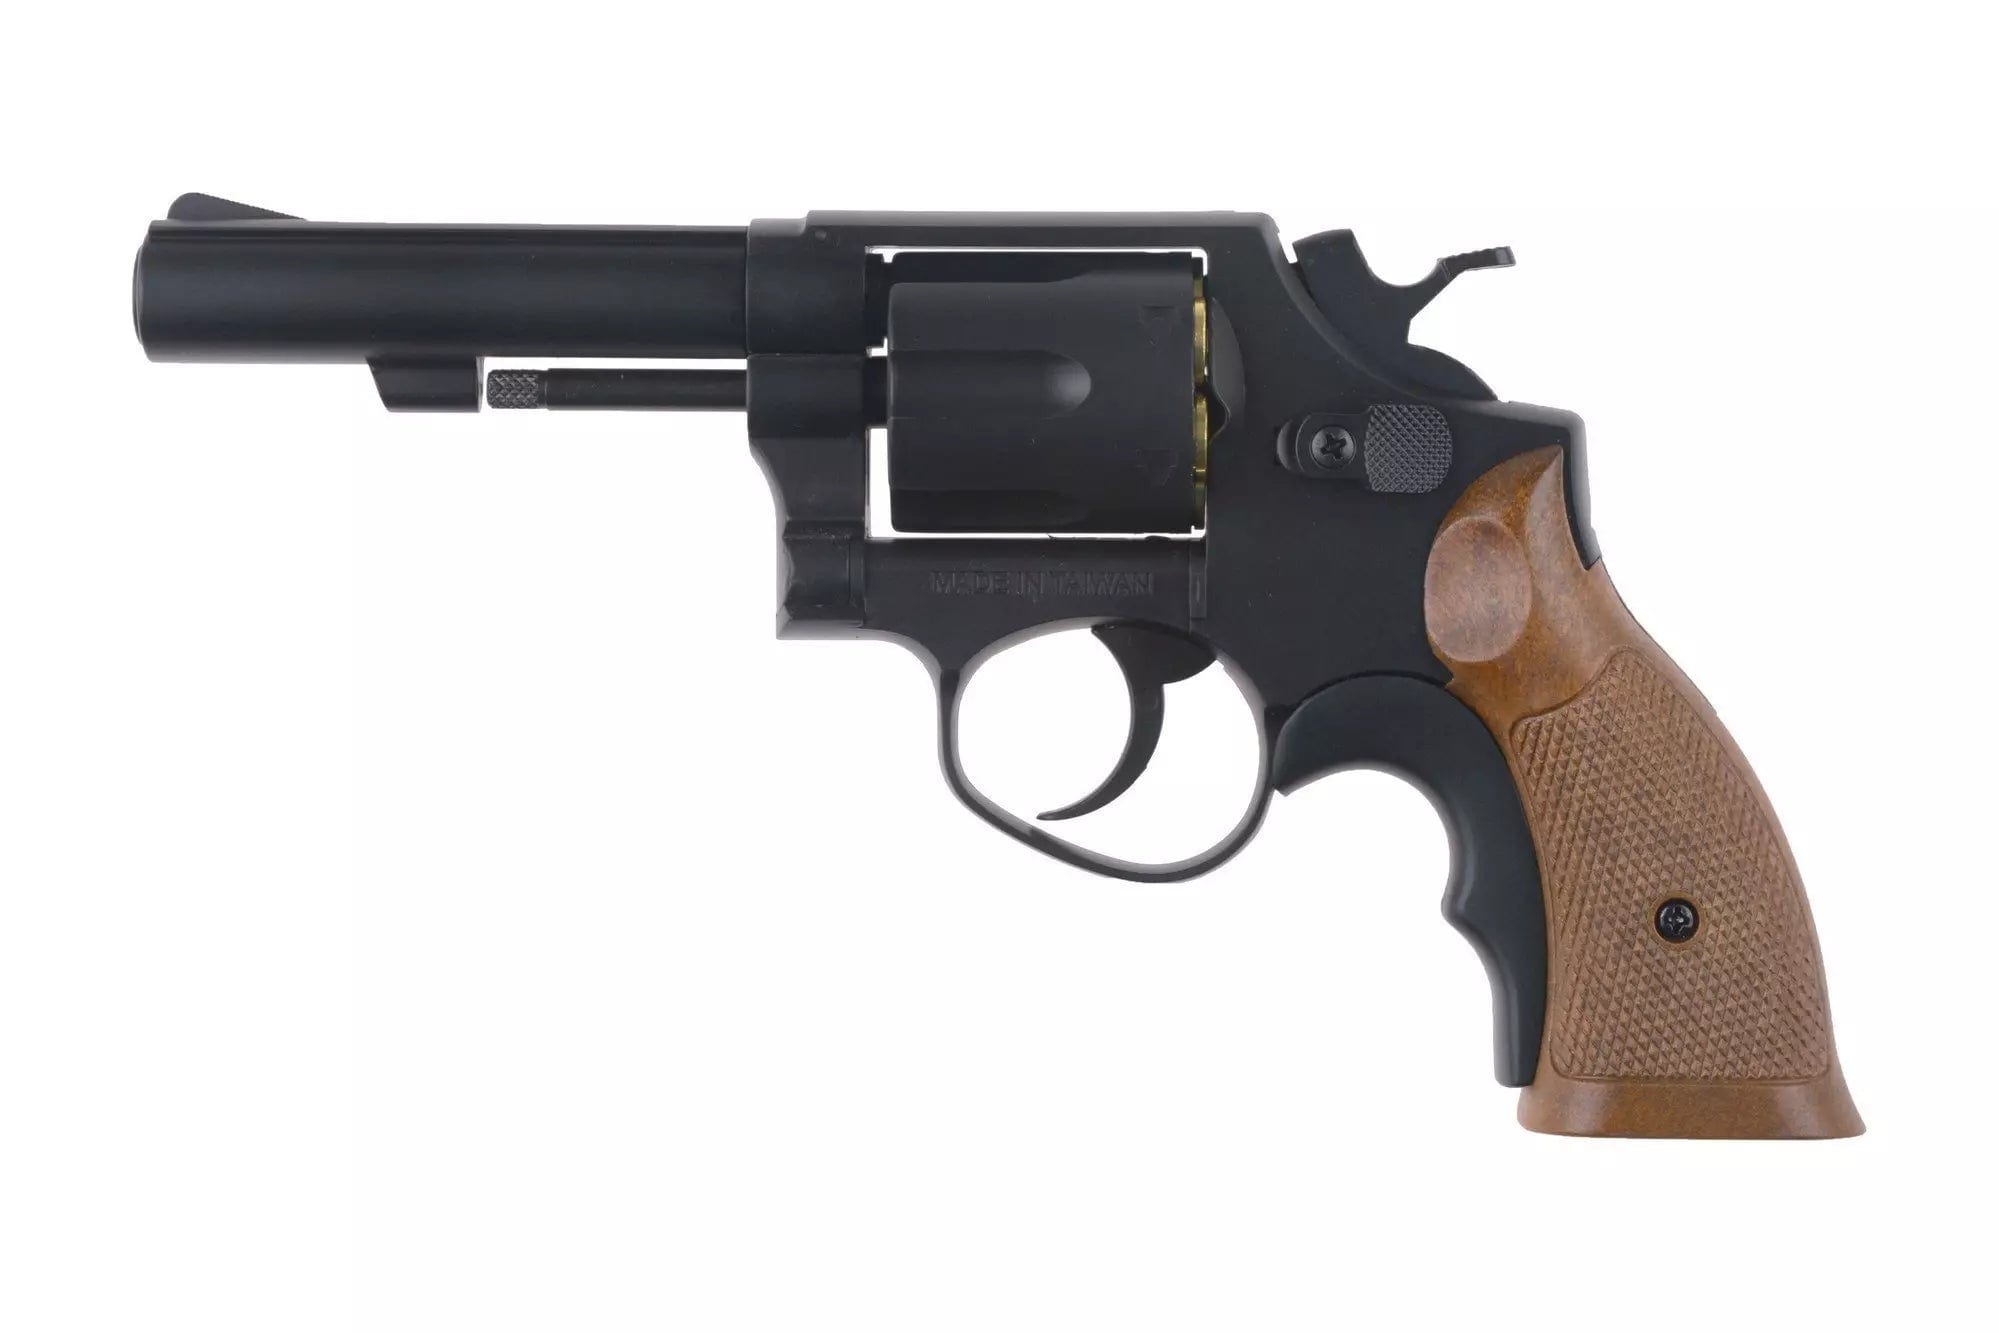 HG131B-1 Revolver Replica - Black/Wood